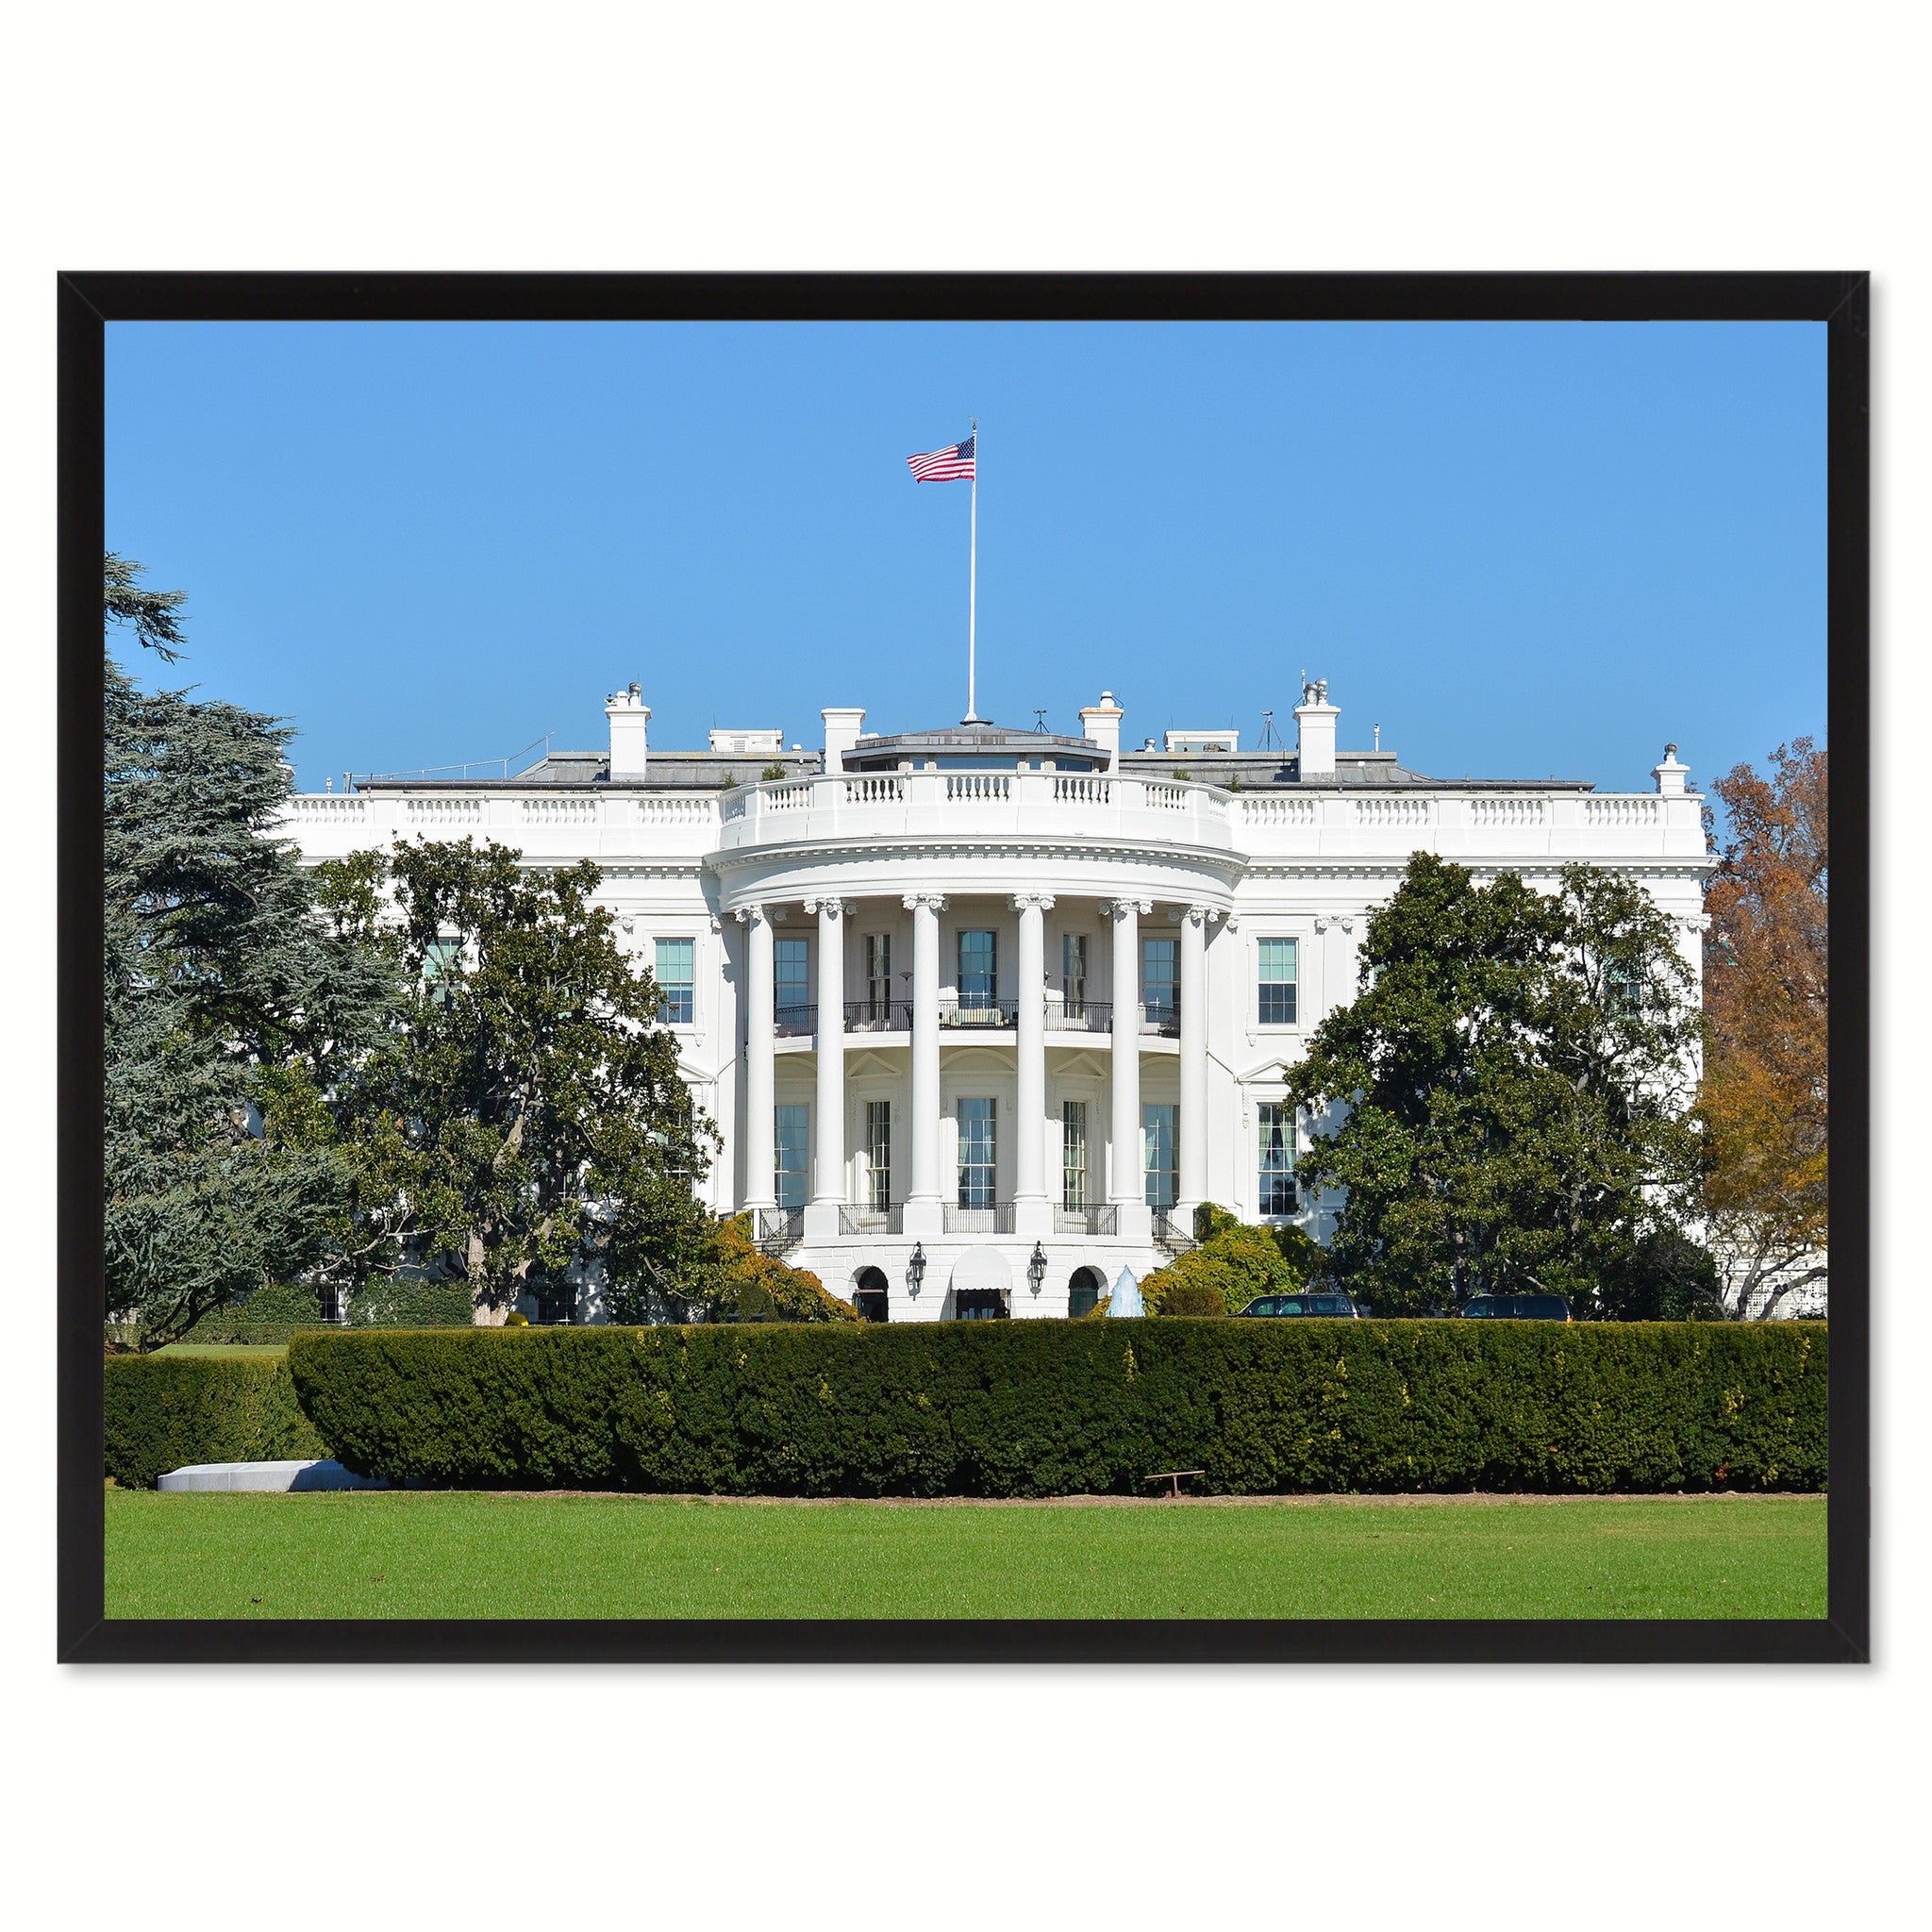 White House Washington DC Landscape Photo Canvas Print Pictures Frames Home Décor Wall Art Gifts